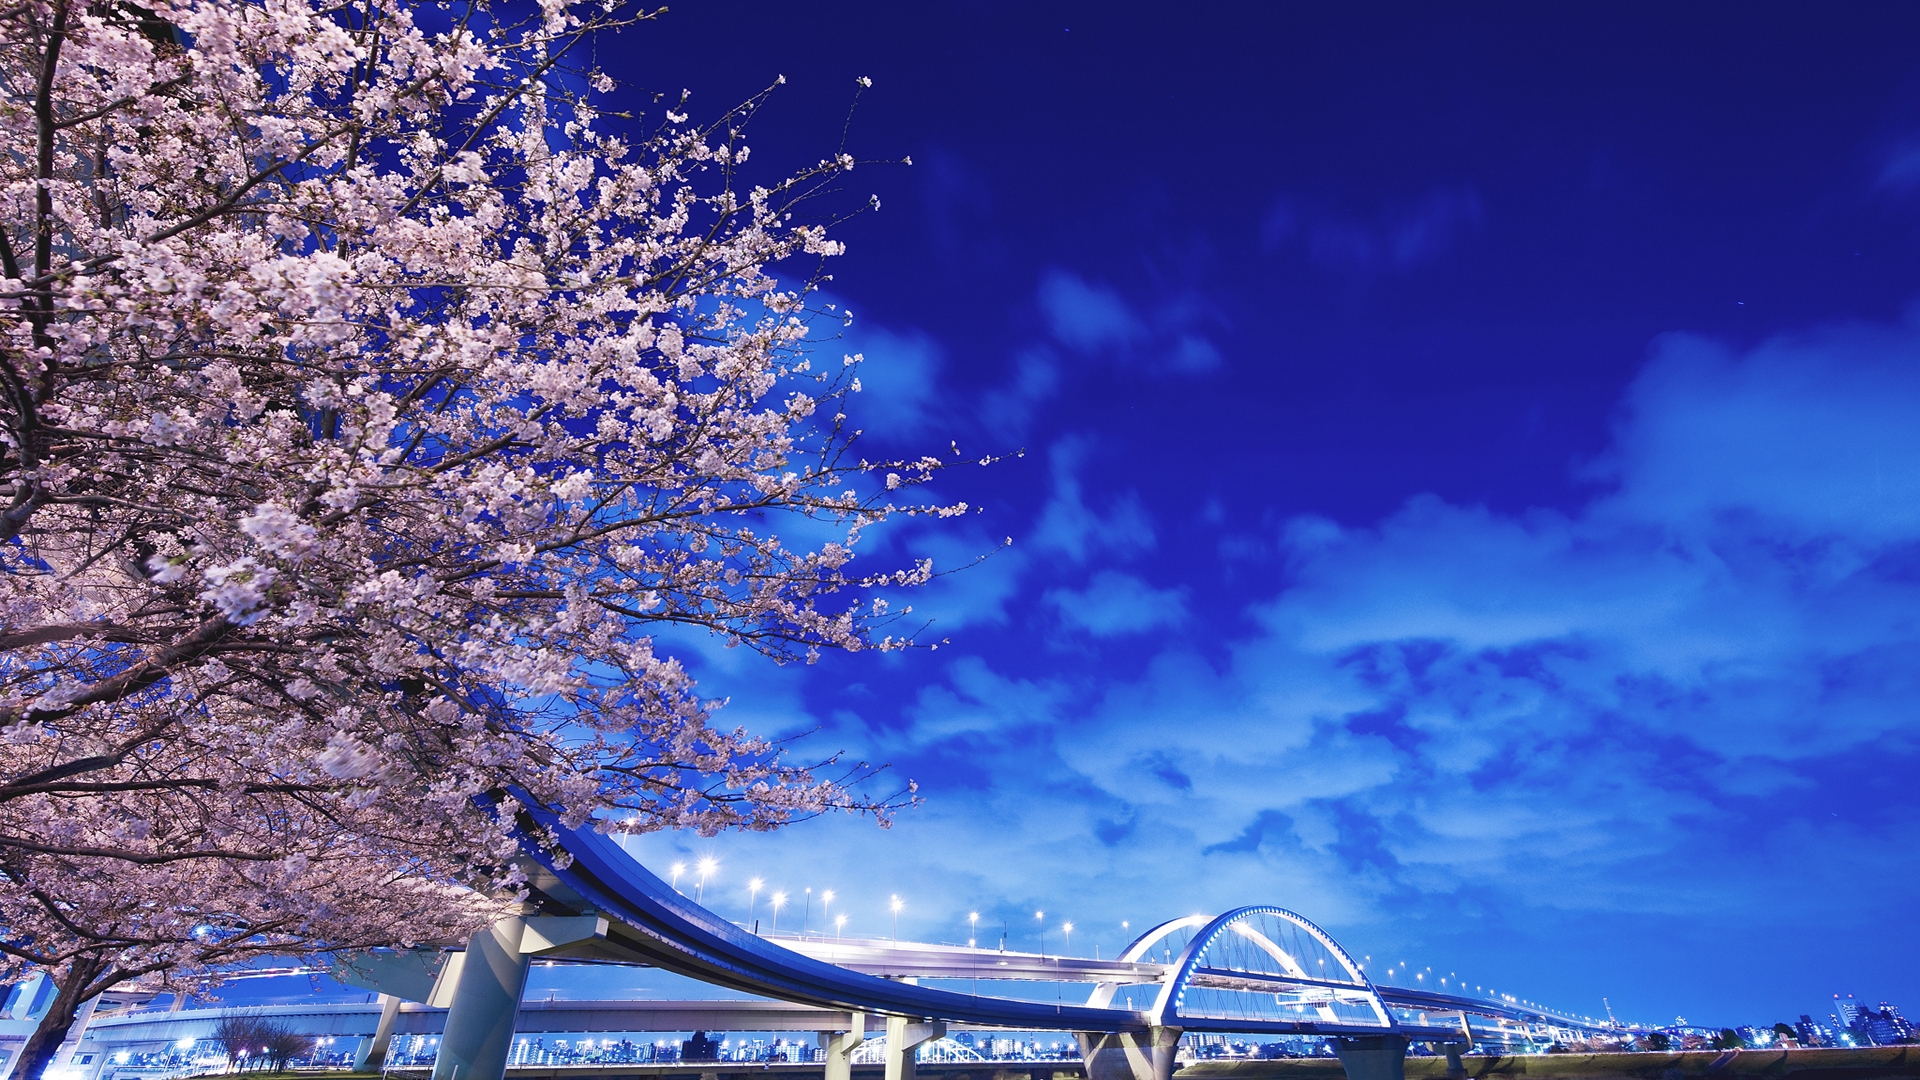  Japan Hokkaido Bridge Sakura Wallpaper Background Full HD 1080p